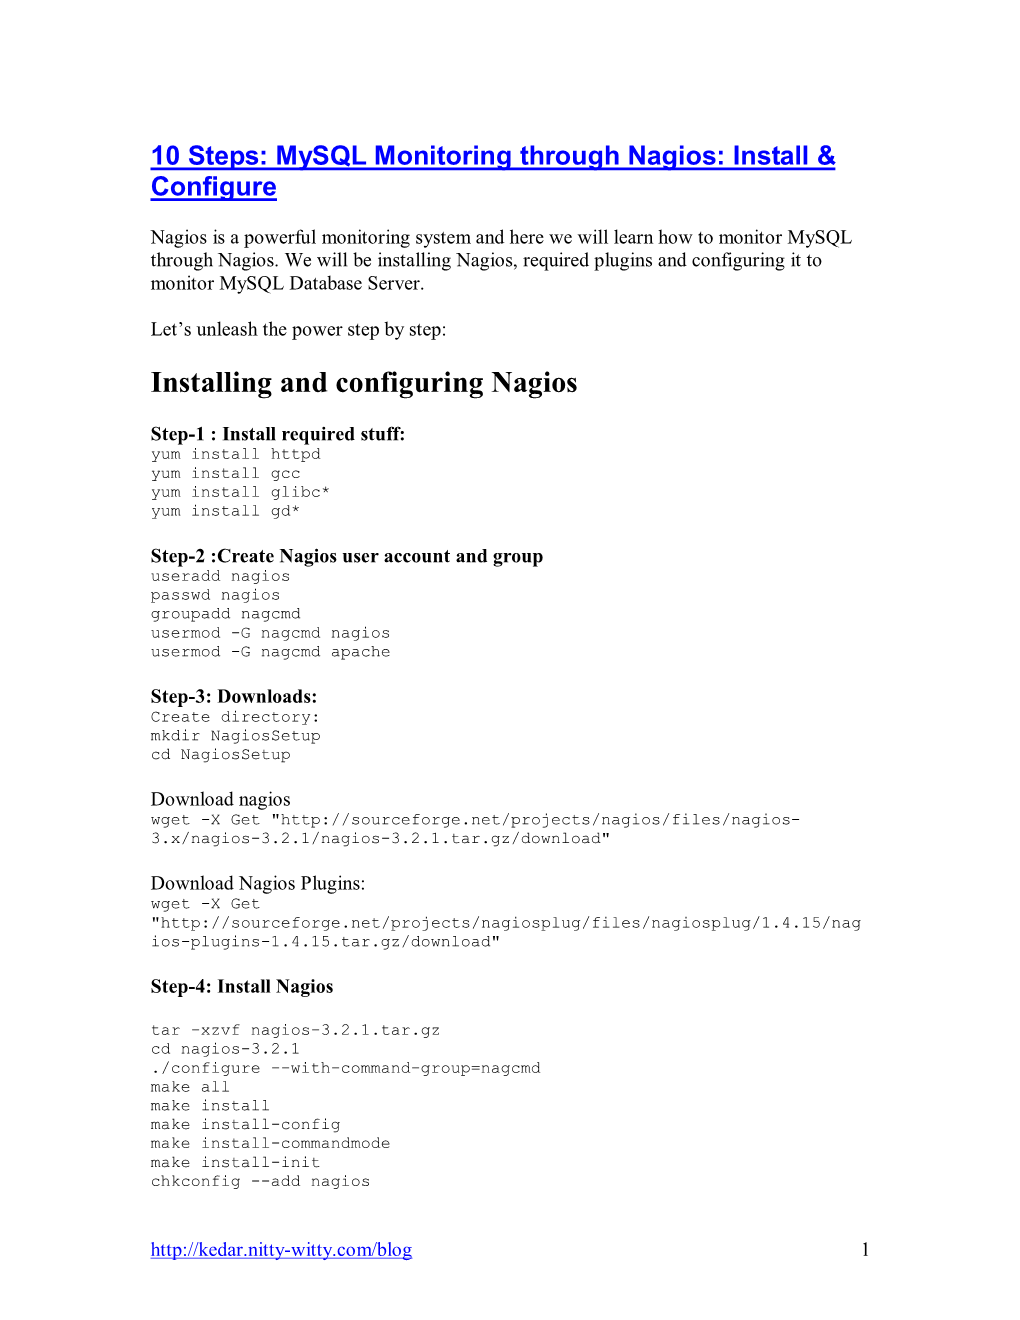 10 Steps: Mysql Monitoring Through Nagios: Install & Configure